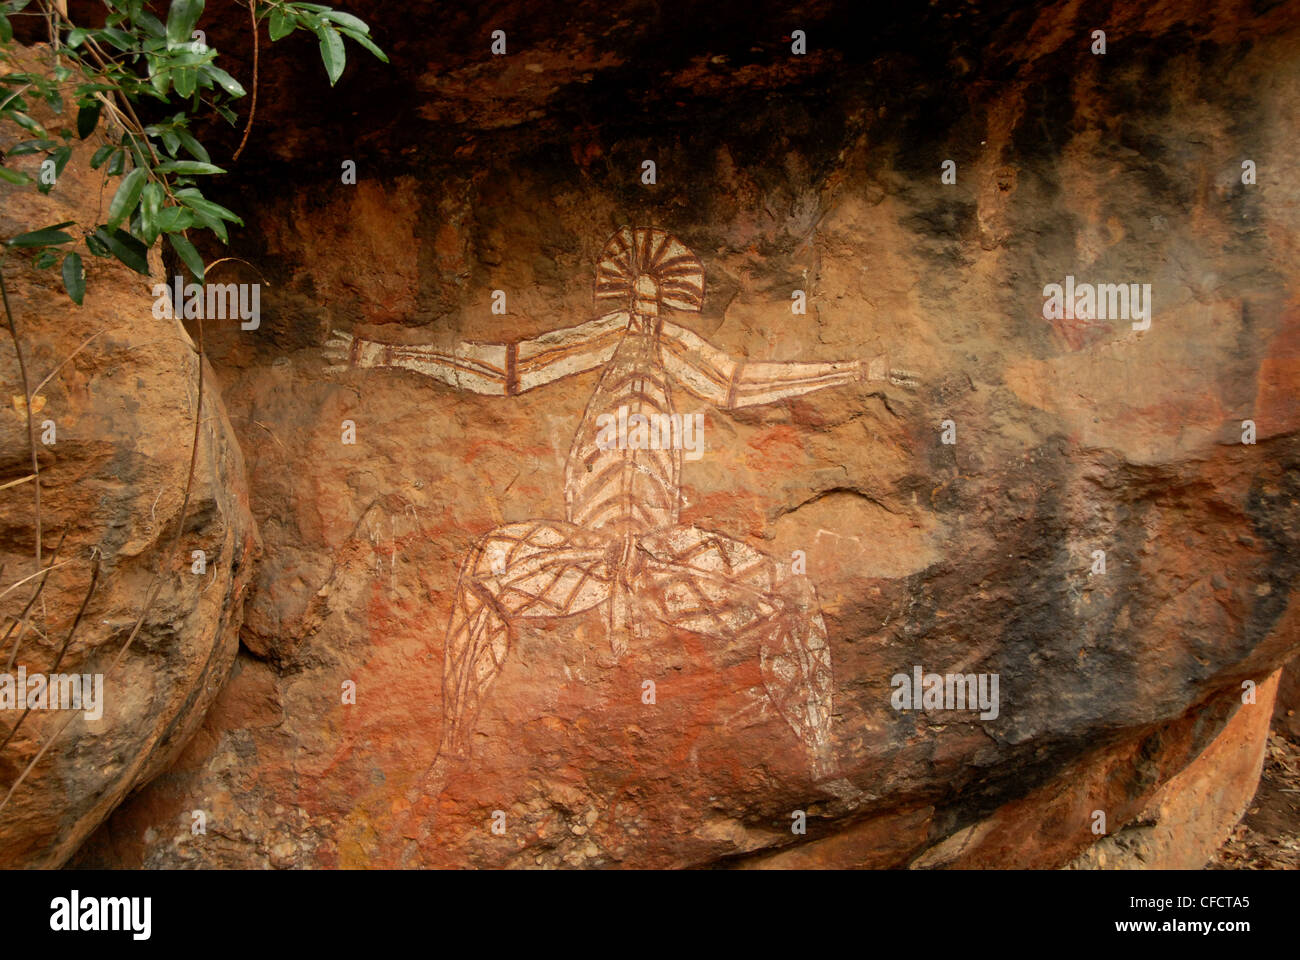 Aboriginal paintings in rock shelter in quartzite cliff, Nourlangie Rock, Kakadu National Park, Northern Territory, Australia Stock Photo